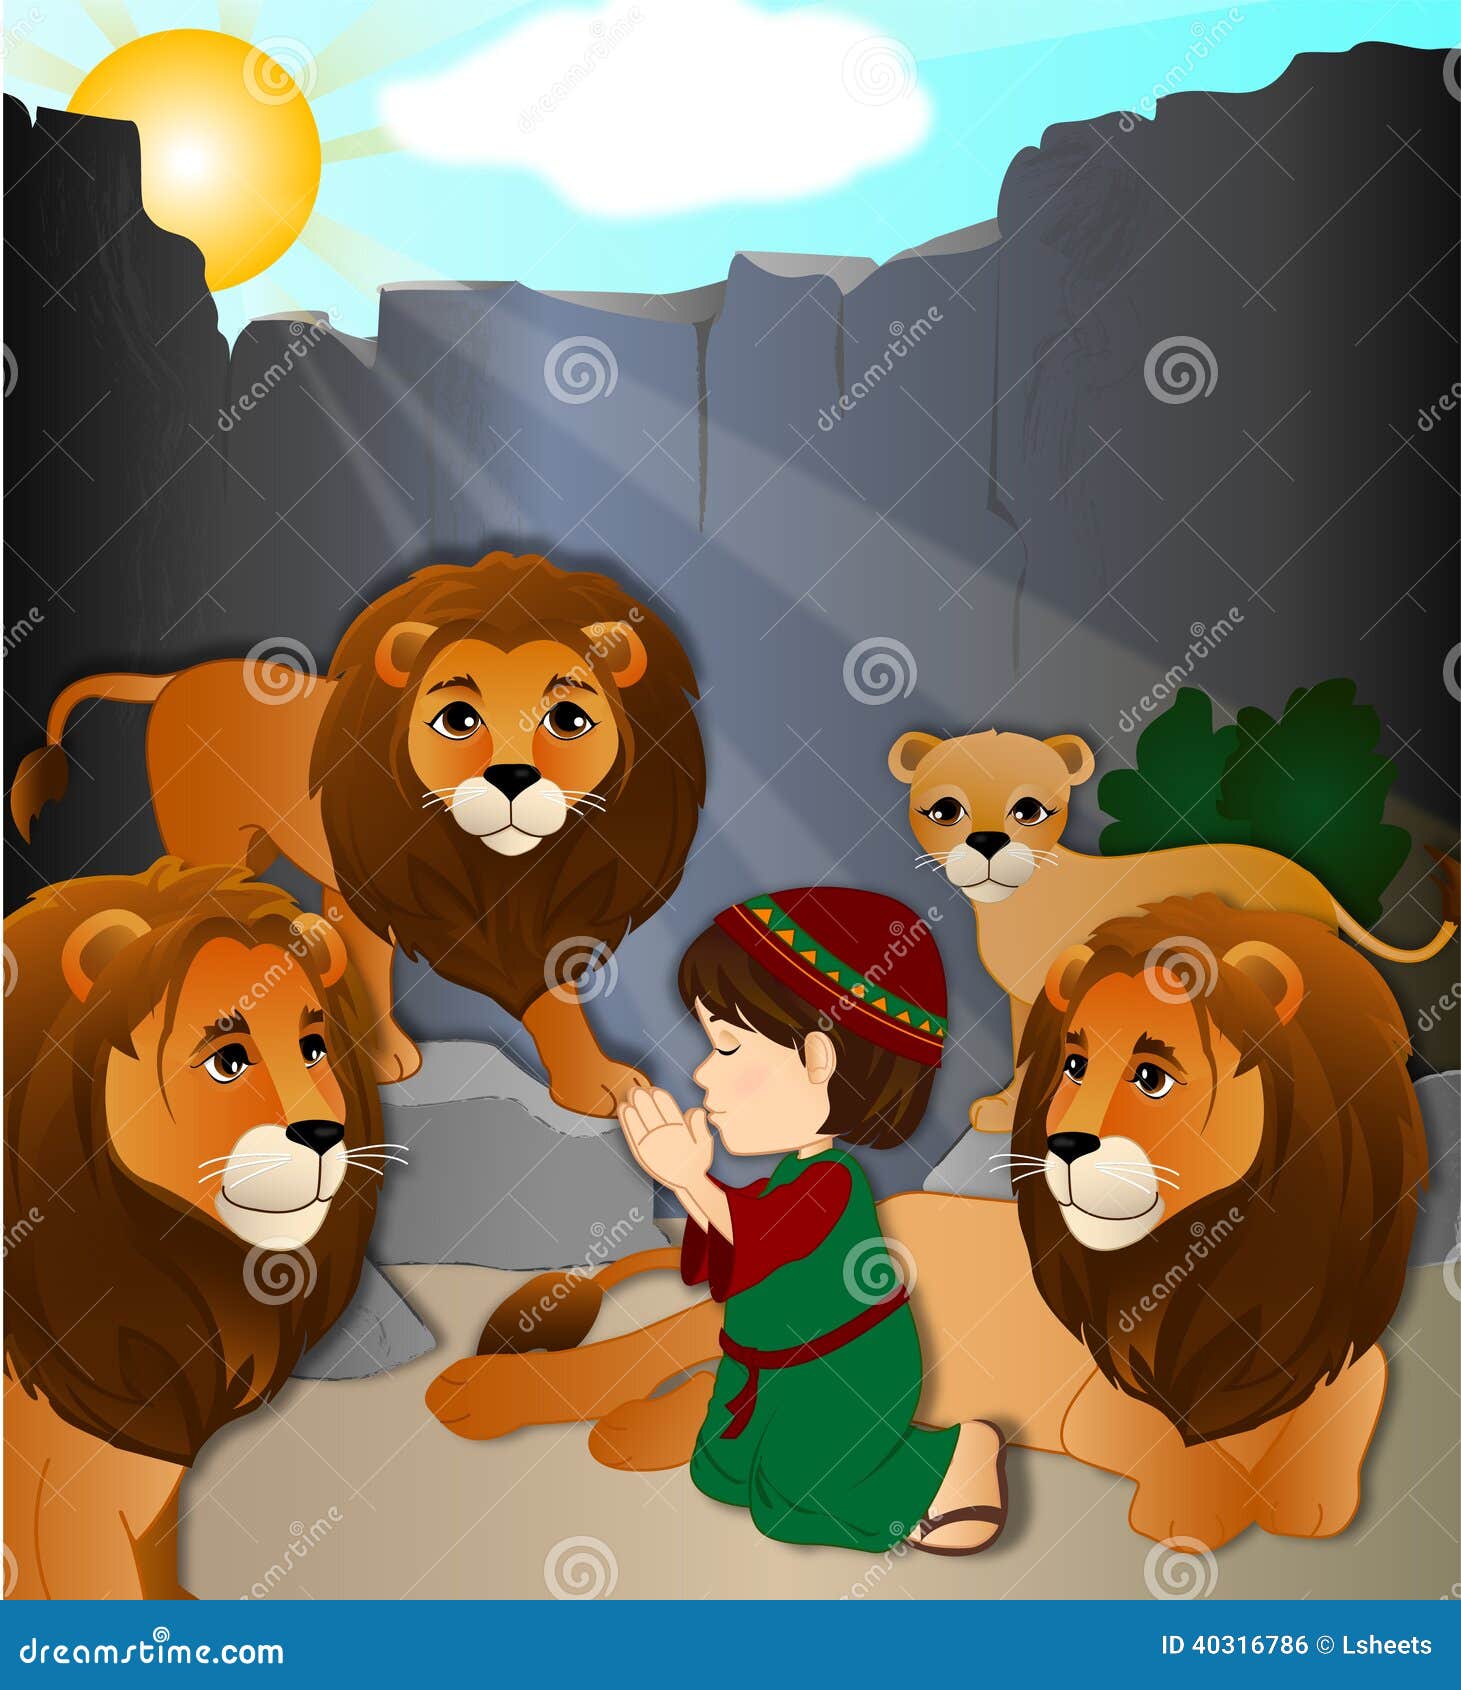 daniel in the lions den